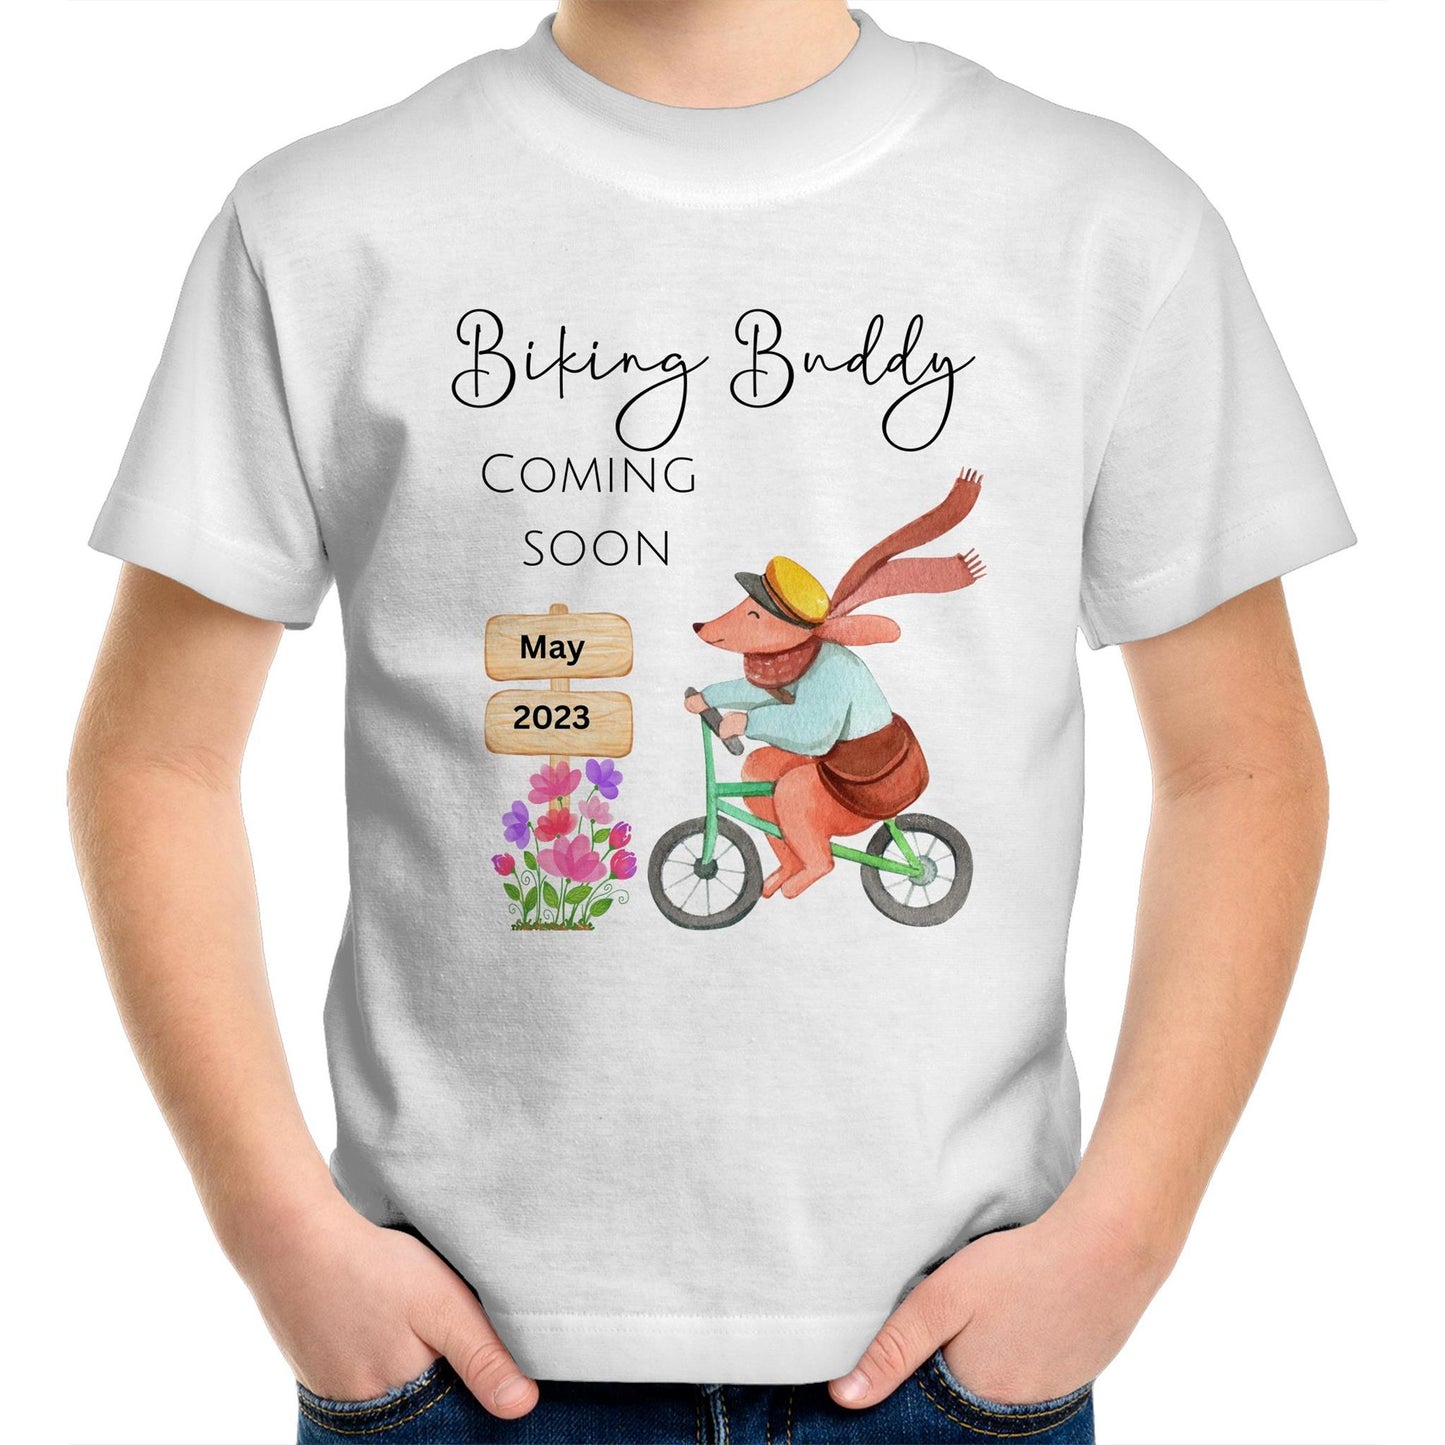 Biking buddy big brother t shirt